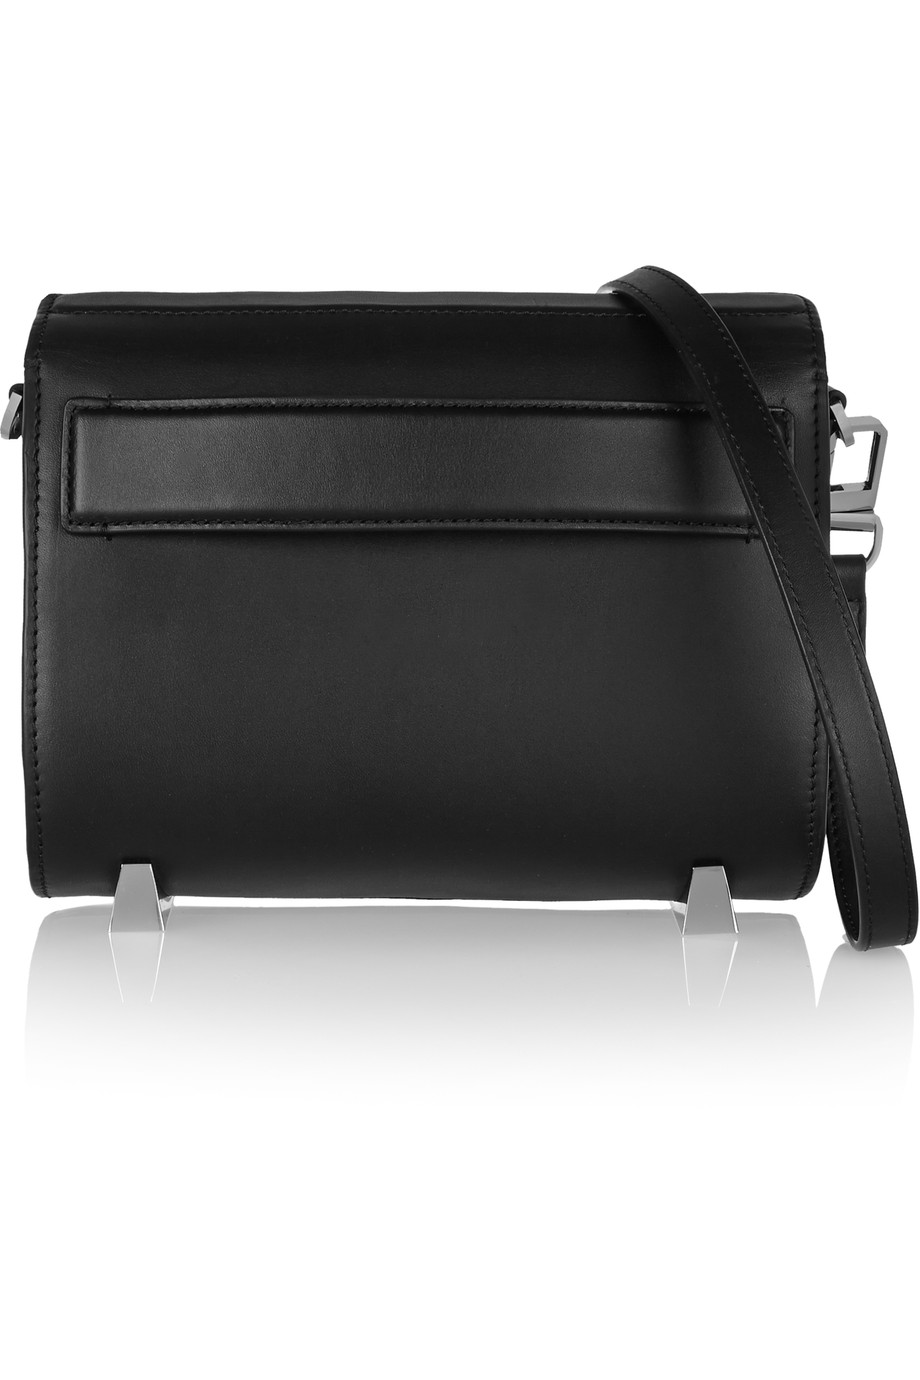 Alexander Wang Chasity Leather Shoulder Bag | ModeSens